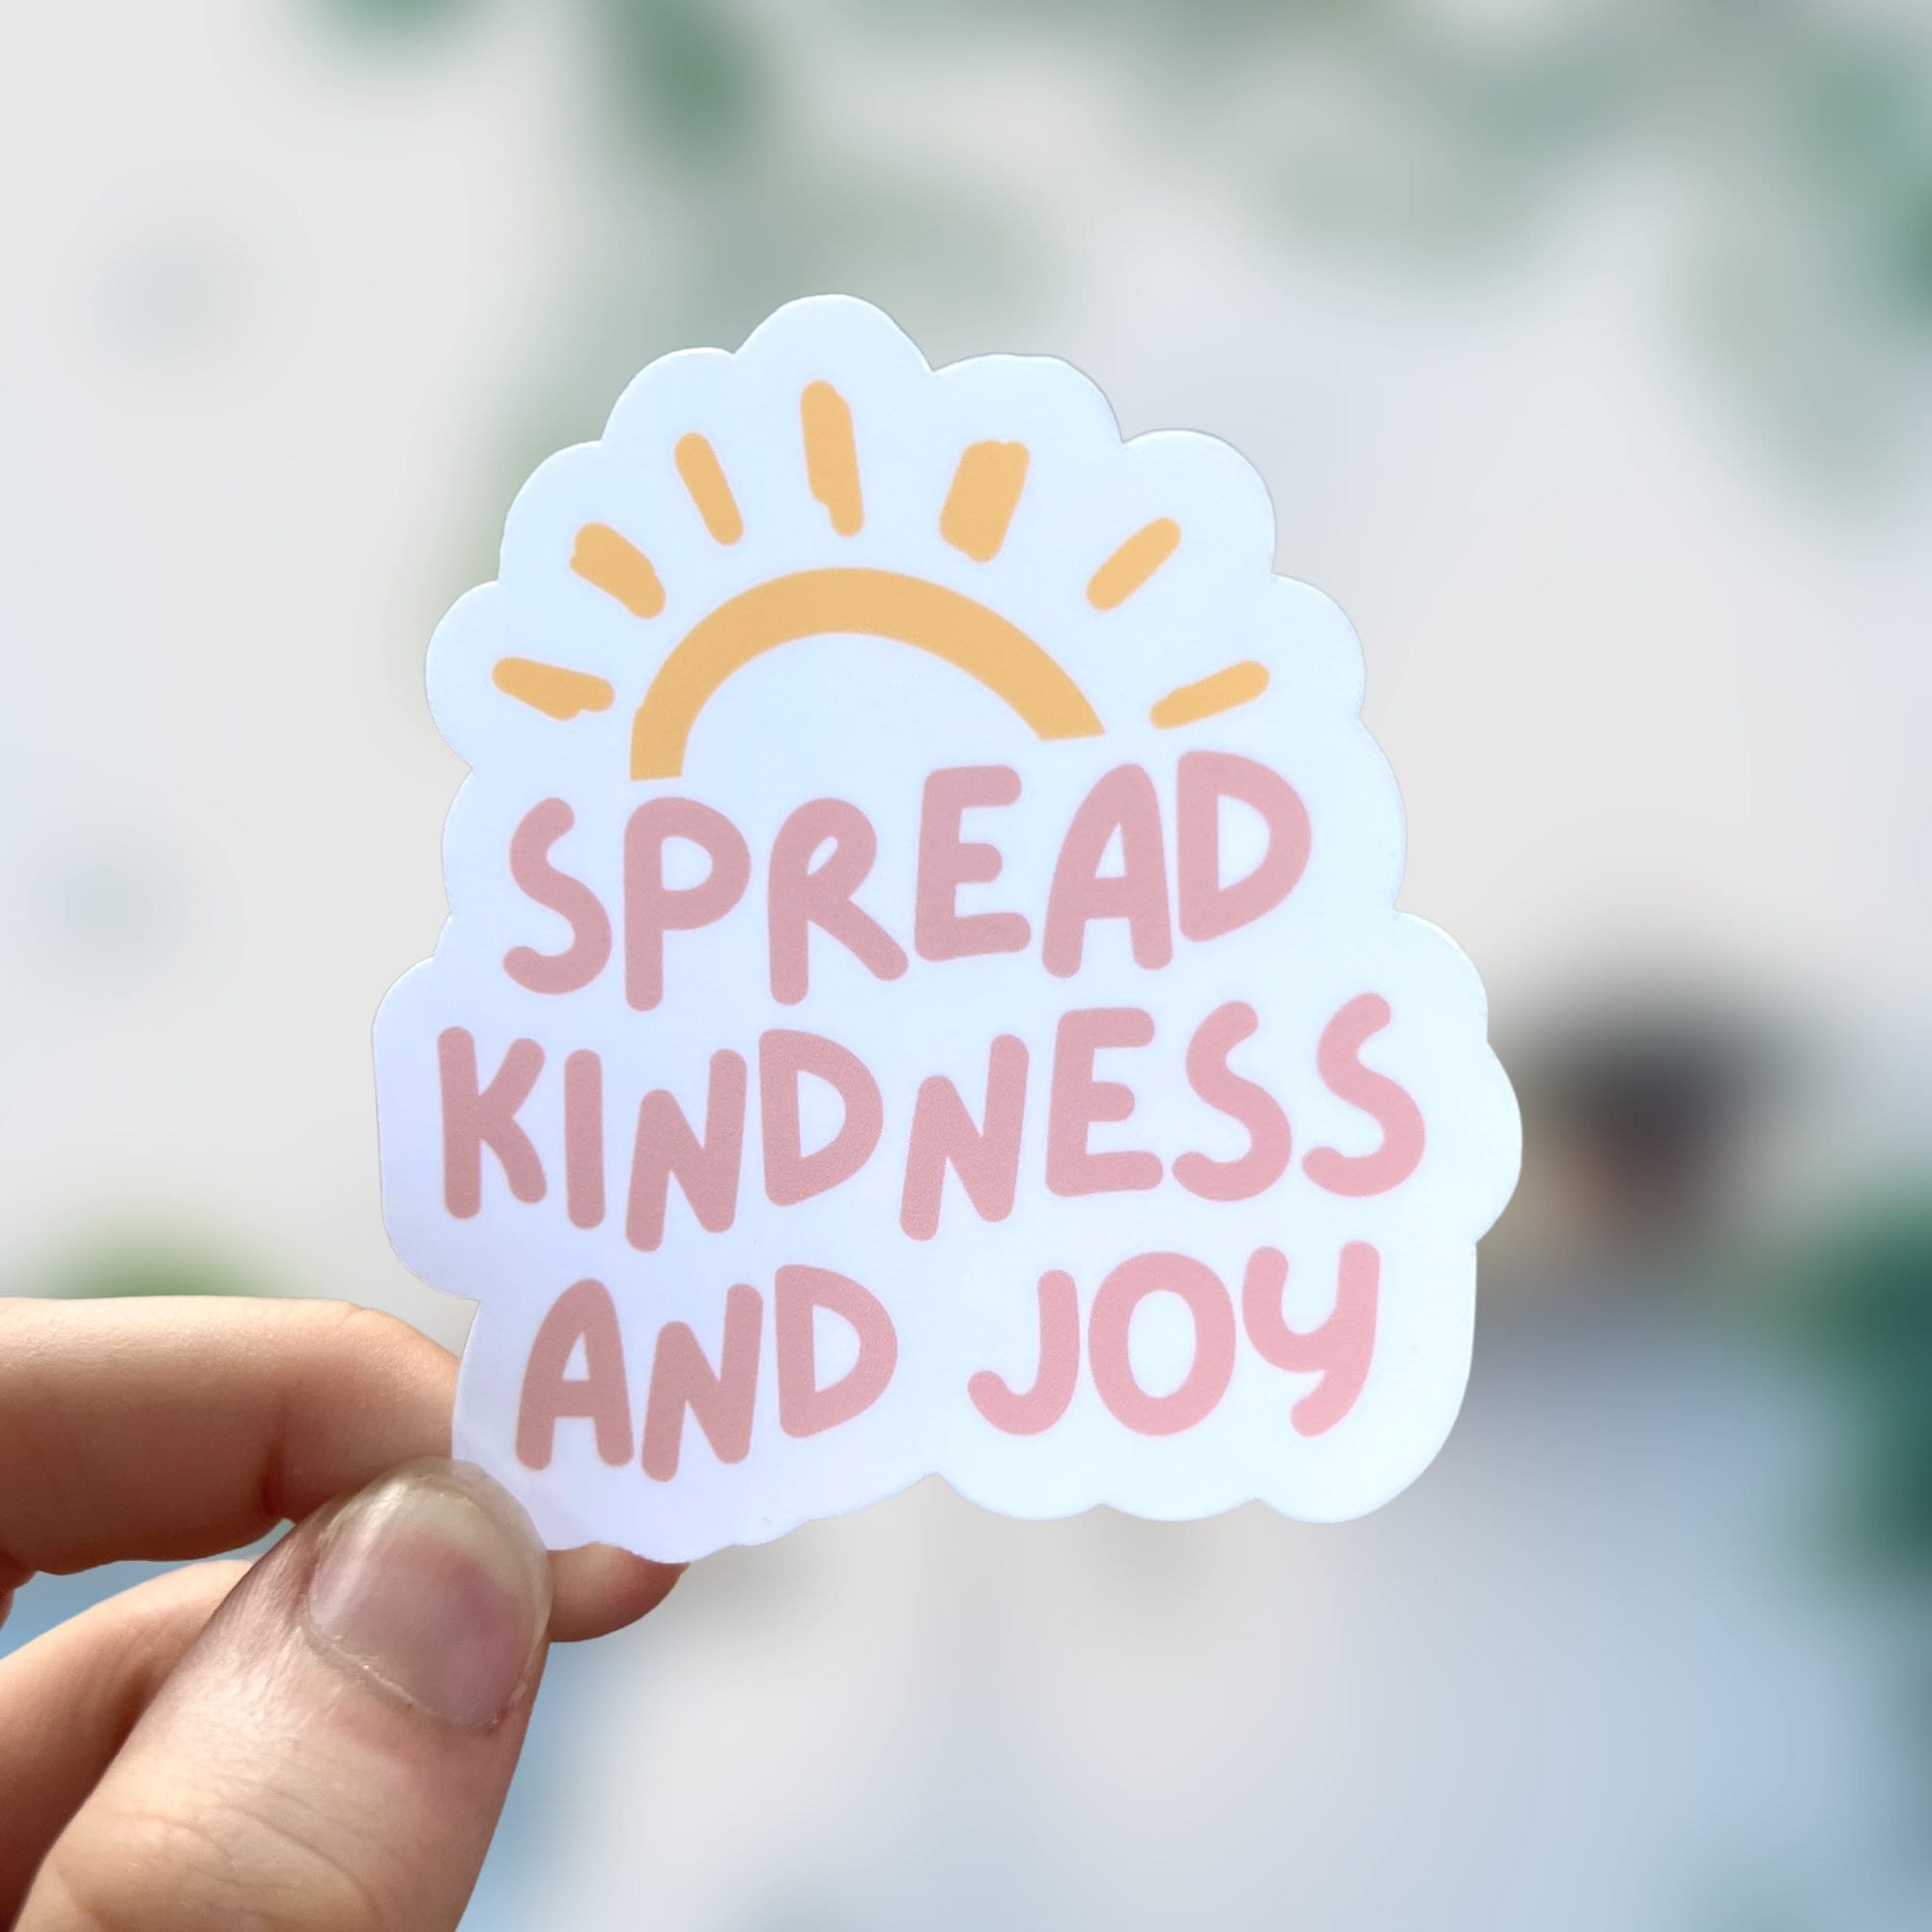 Be Kind To Every Kind Sticker, Kindness Sticker, Water Bottle Stickers,  Laptop Stickers, Spread Kindness Sticker